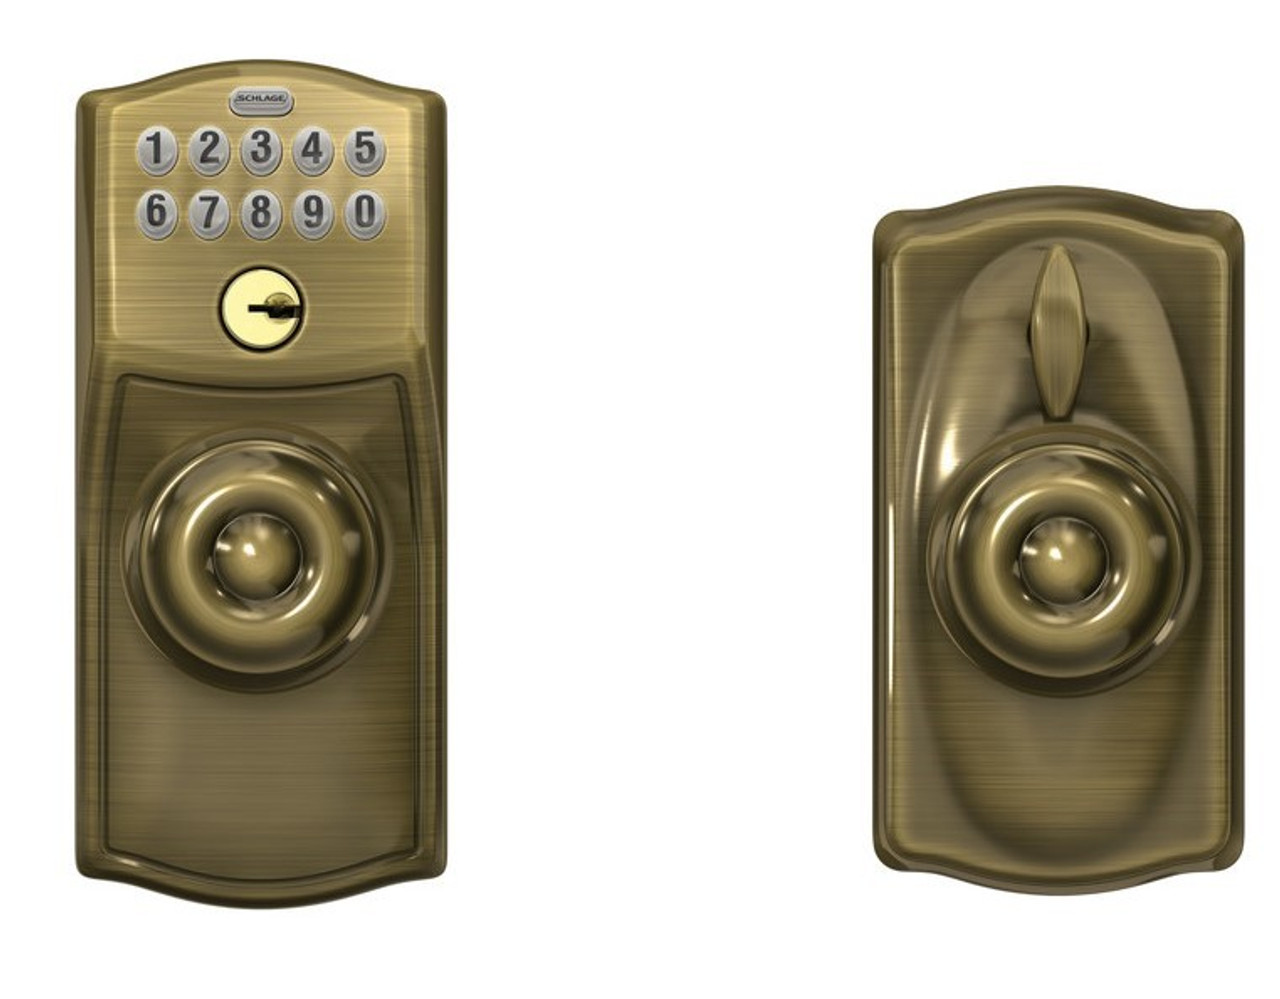 Schlage FE595 - Keypad Entry with Flex-Lock Camelot Housing  Georgian Knob